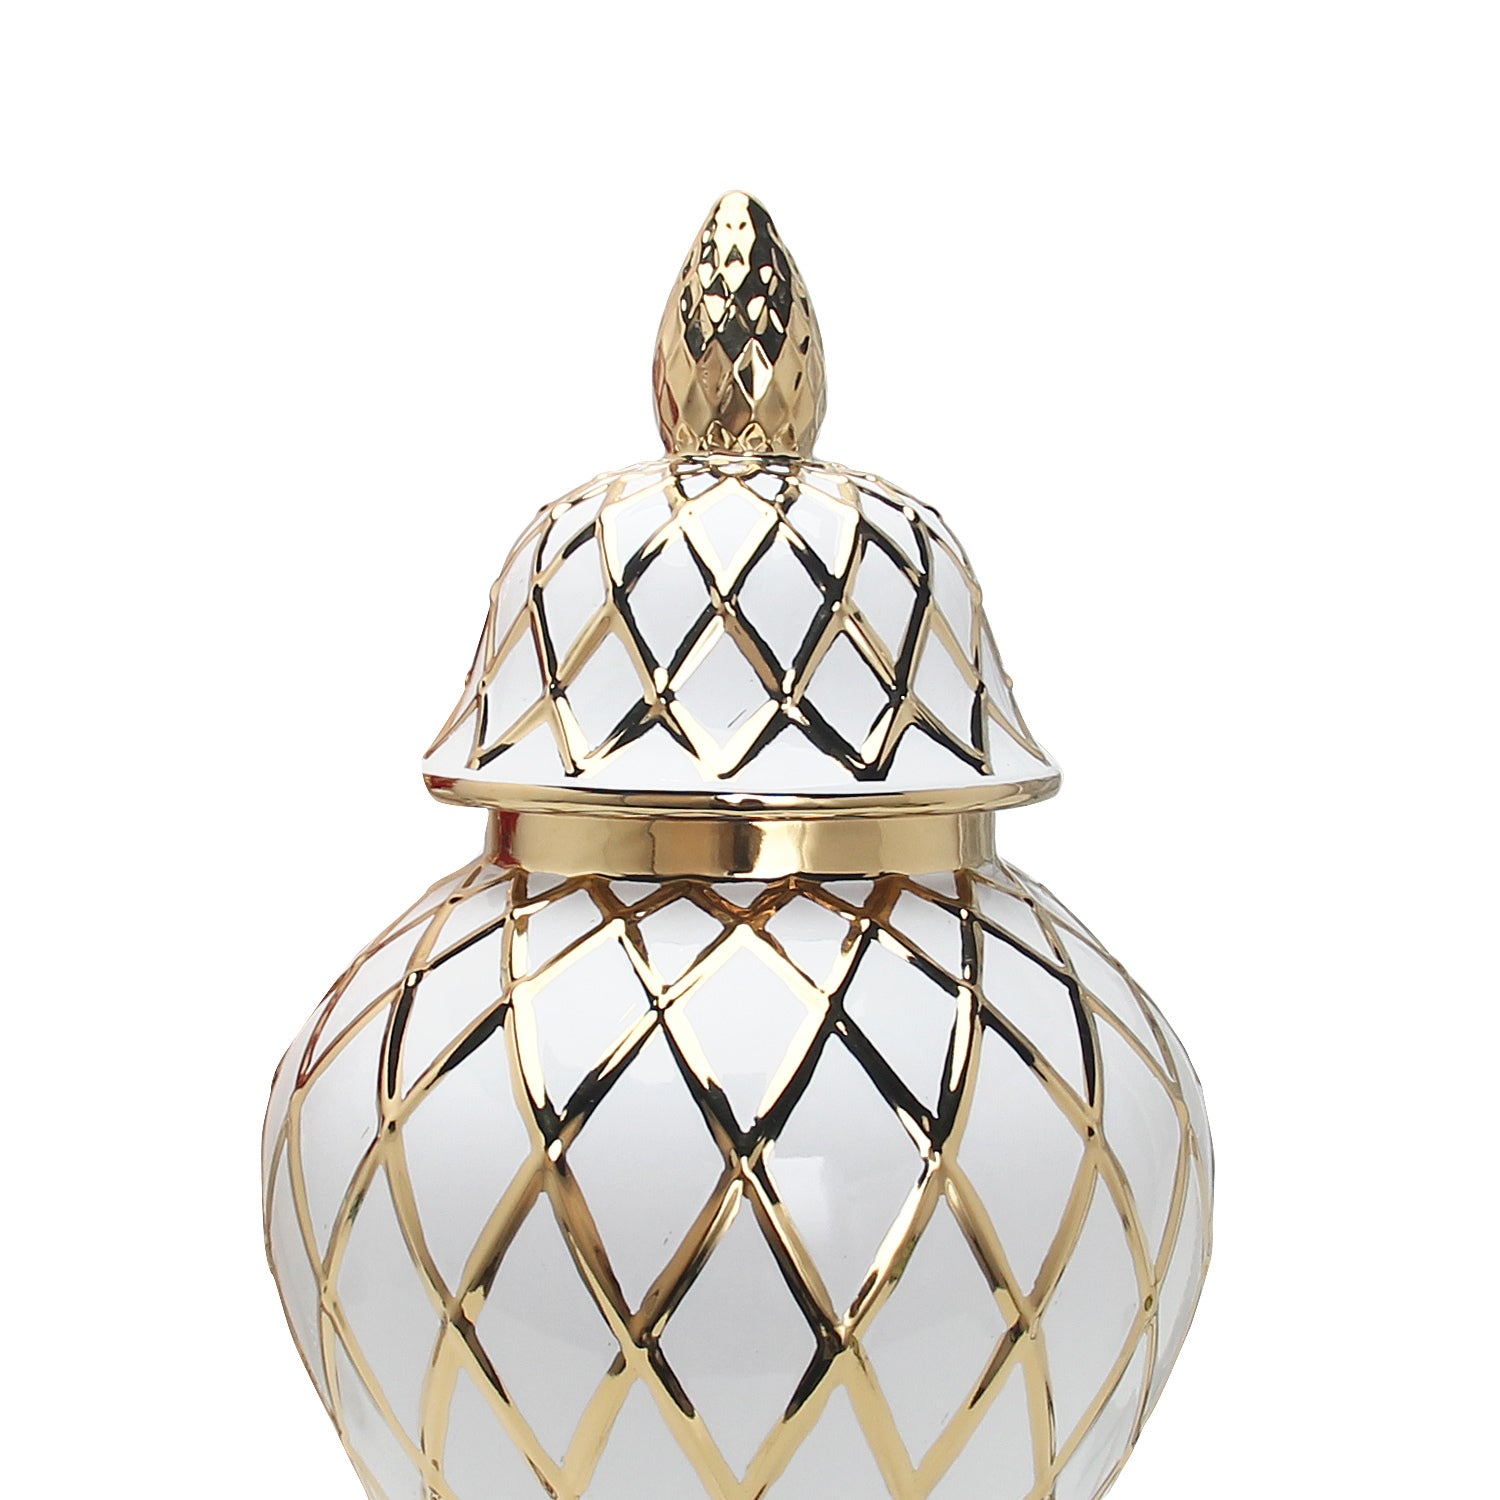 White and Gold Ceramic Decorative Ginger Jar Vase white-ceramic